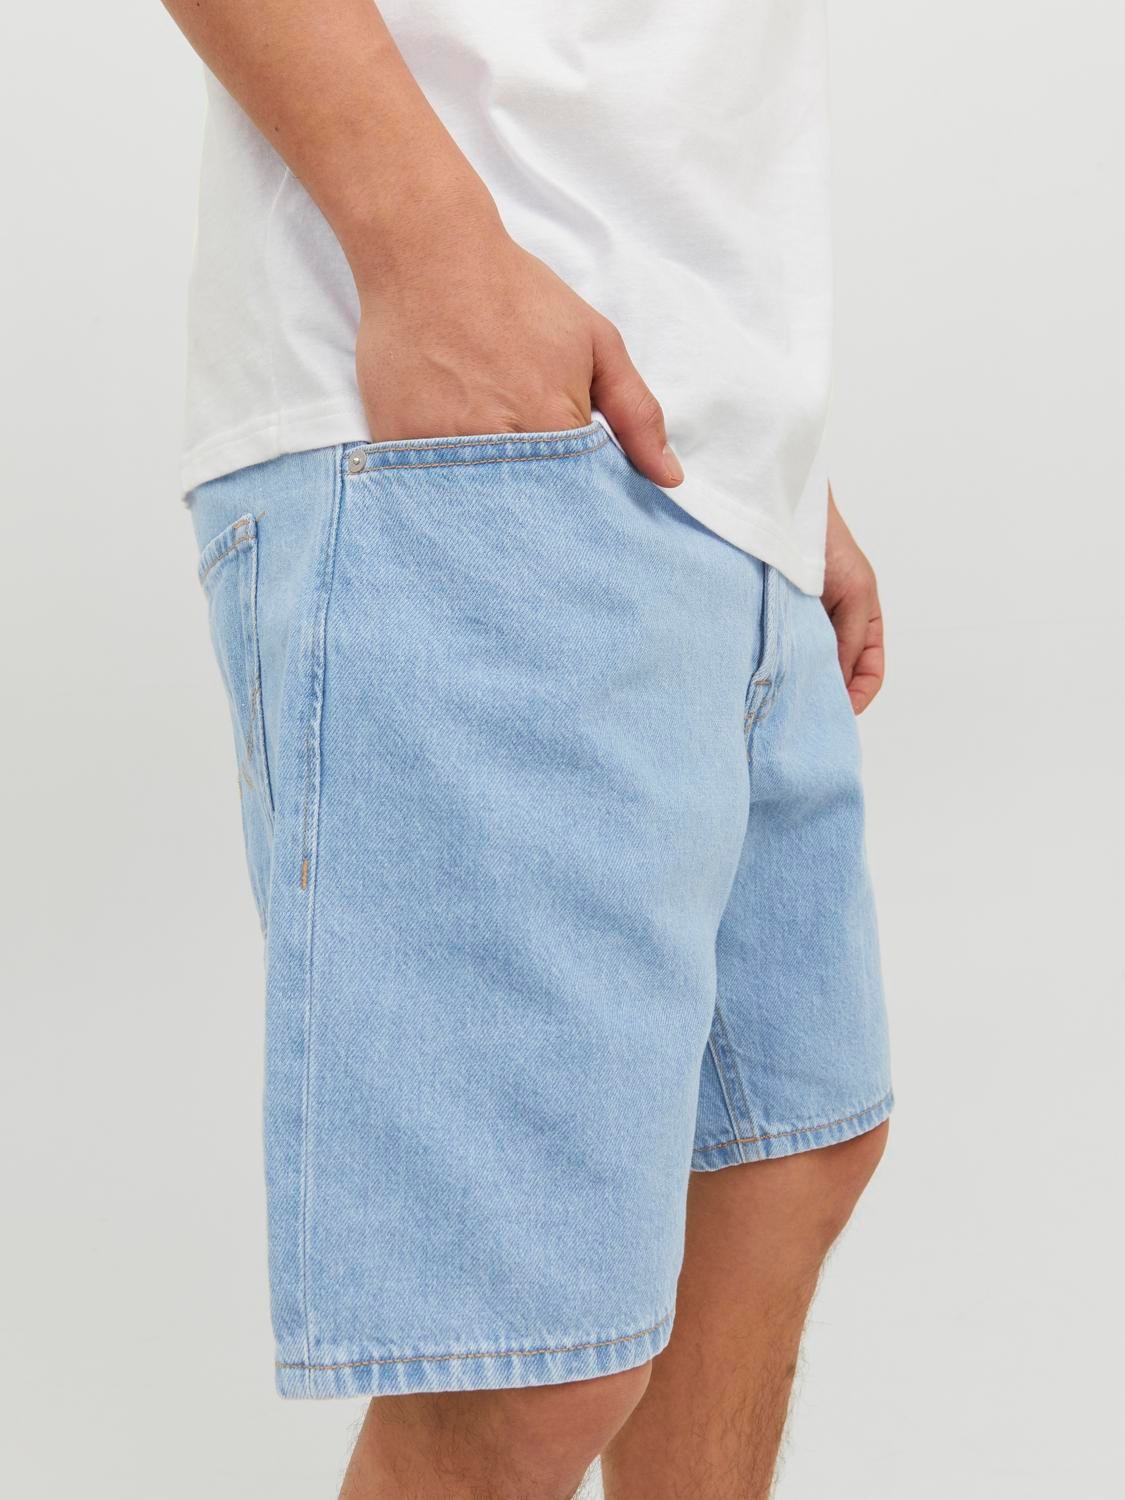 Jack & Jones Relaxed Fit Jeans Shorts -Blue Denim - 12223606